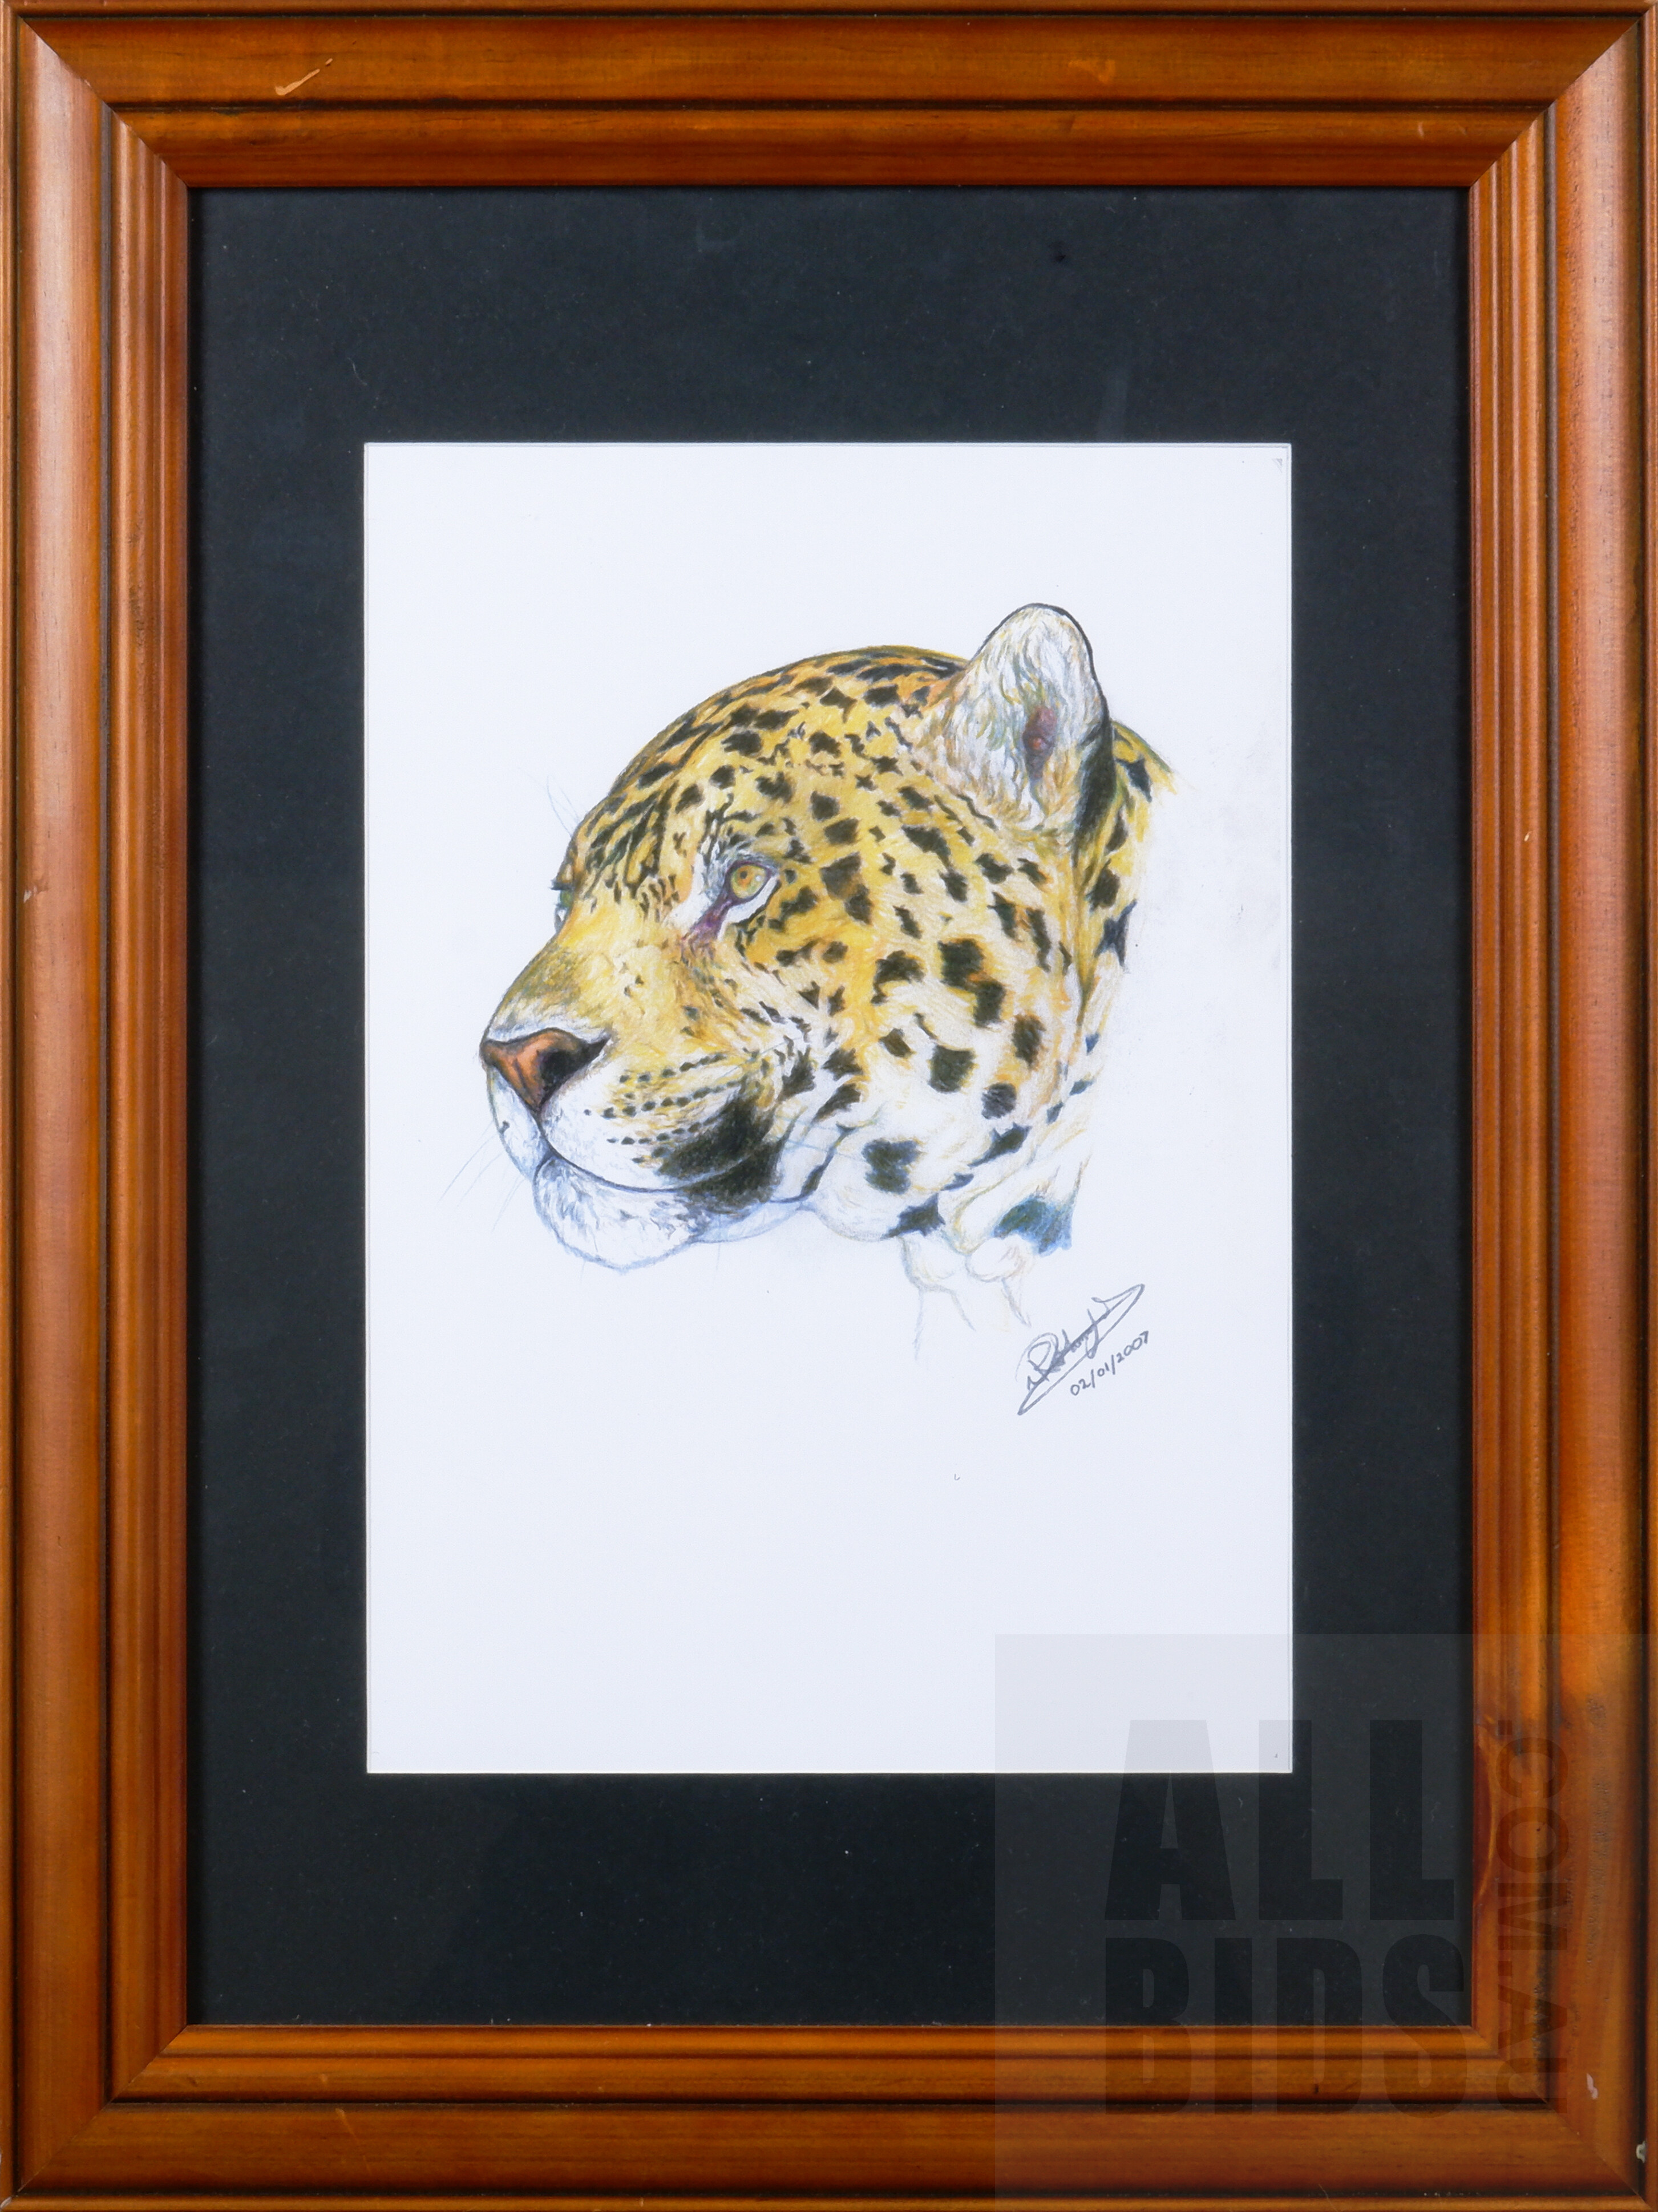 'Nayana Rathmalgoda (born 1988), Leopard, Offset Print, 29 x 20 cm'